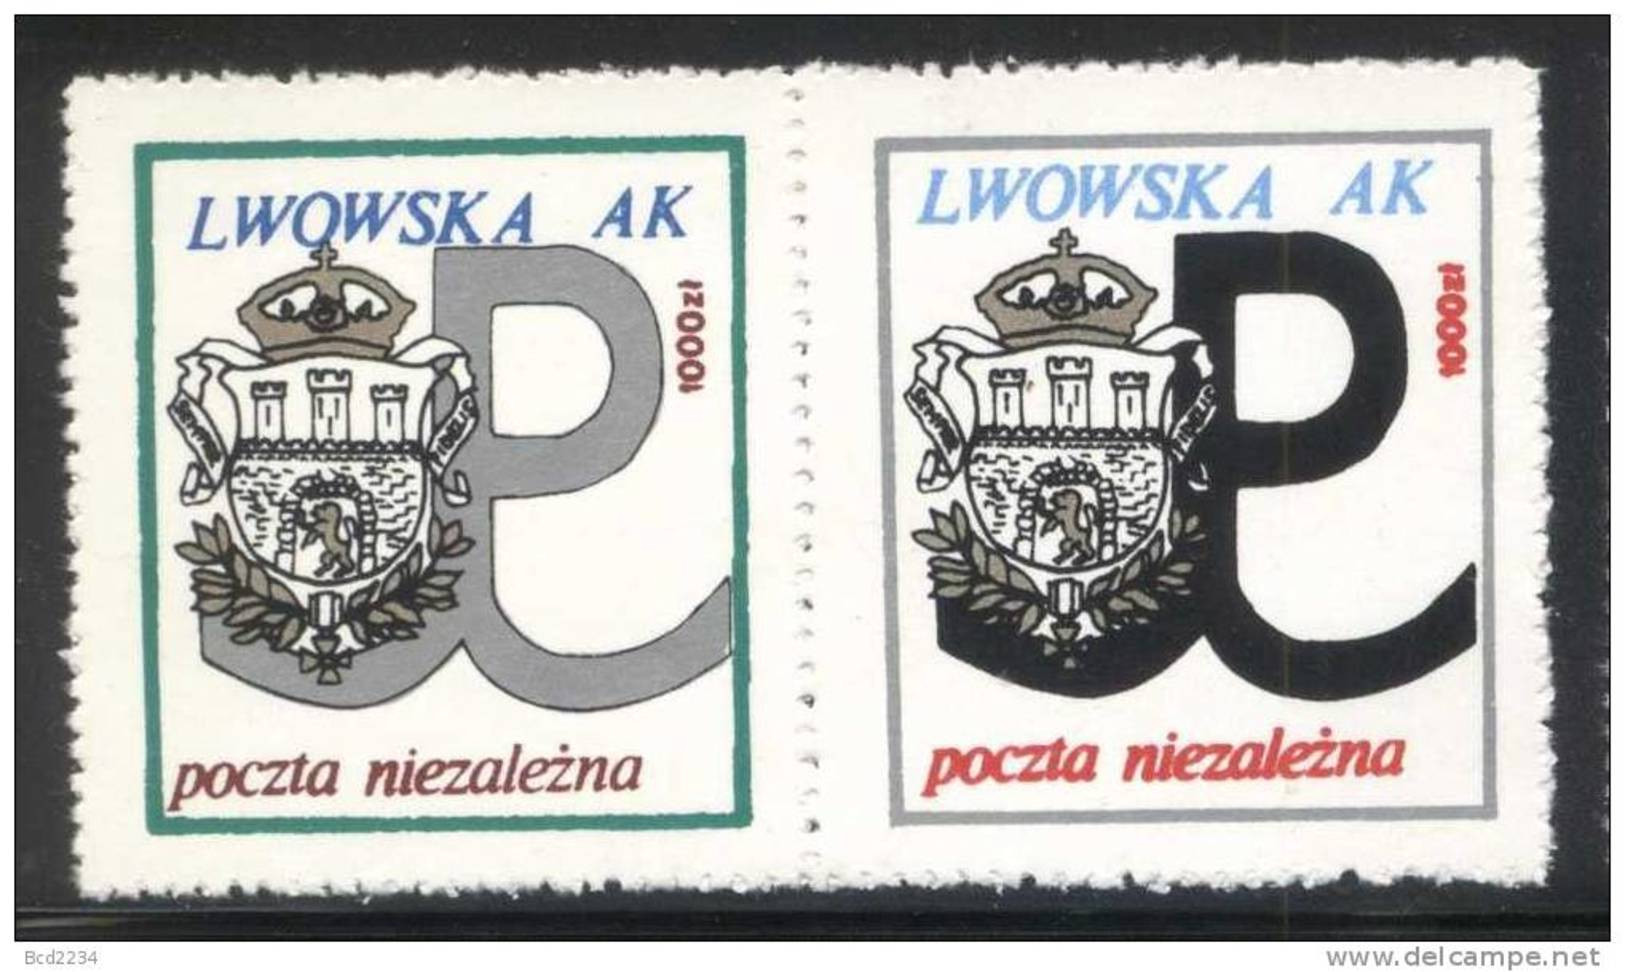 POLAND SOLIDARITY SOLIDARNOSC (POCZTA NIEZALEZNA) LWOW LVIV UKRAINE UNDERGROUND (LWOWSKA AK) PAIR - Solidarnosc Labels